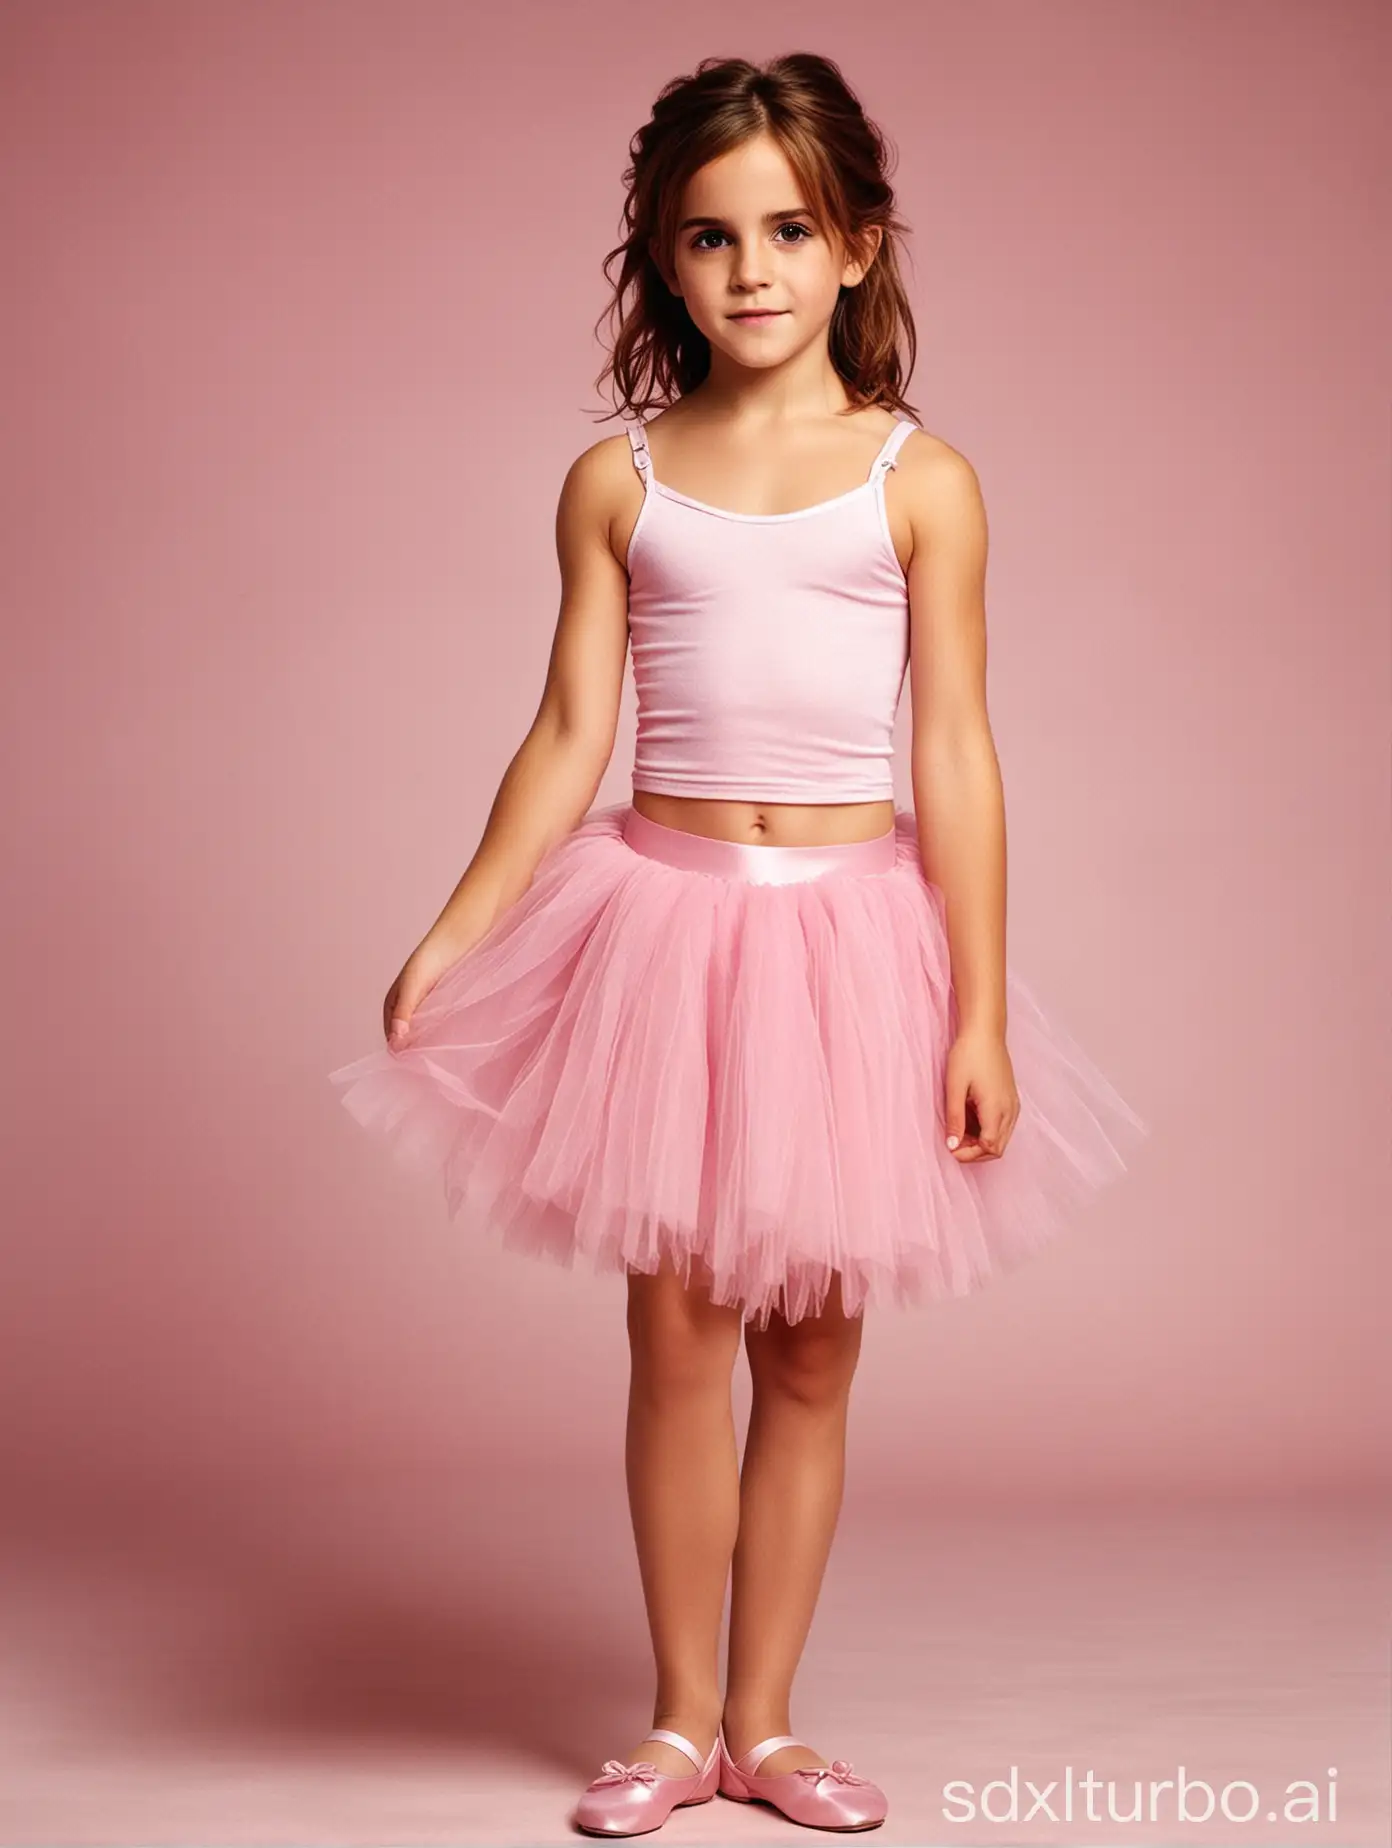 Emma Watson at 6 years old, long hair, very muscular abs, pink ballerina, tutu skirt